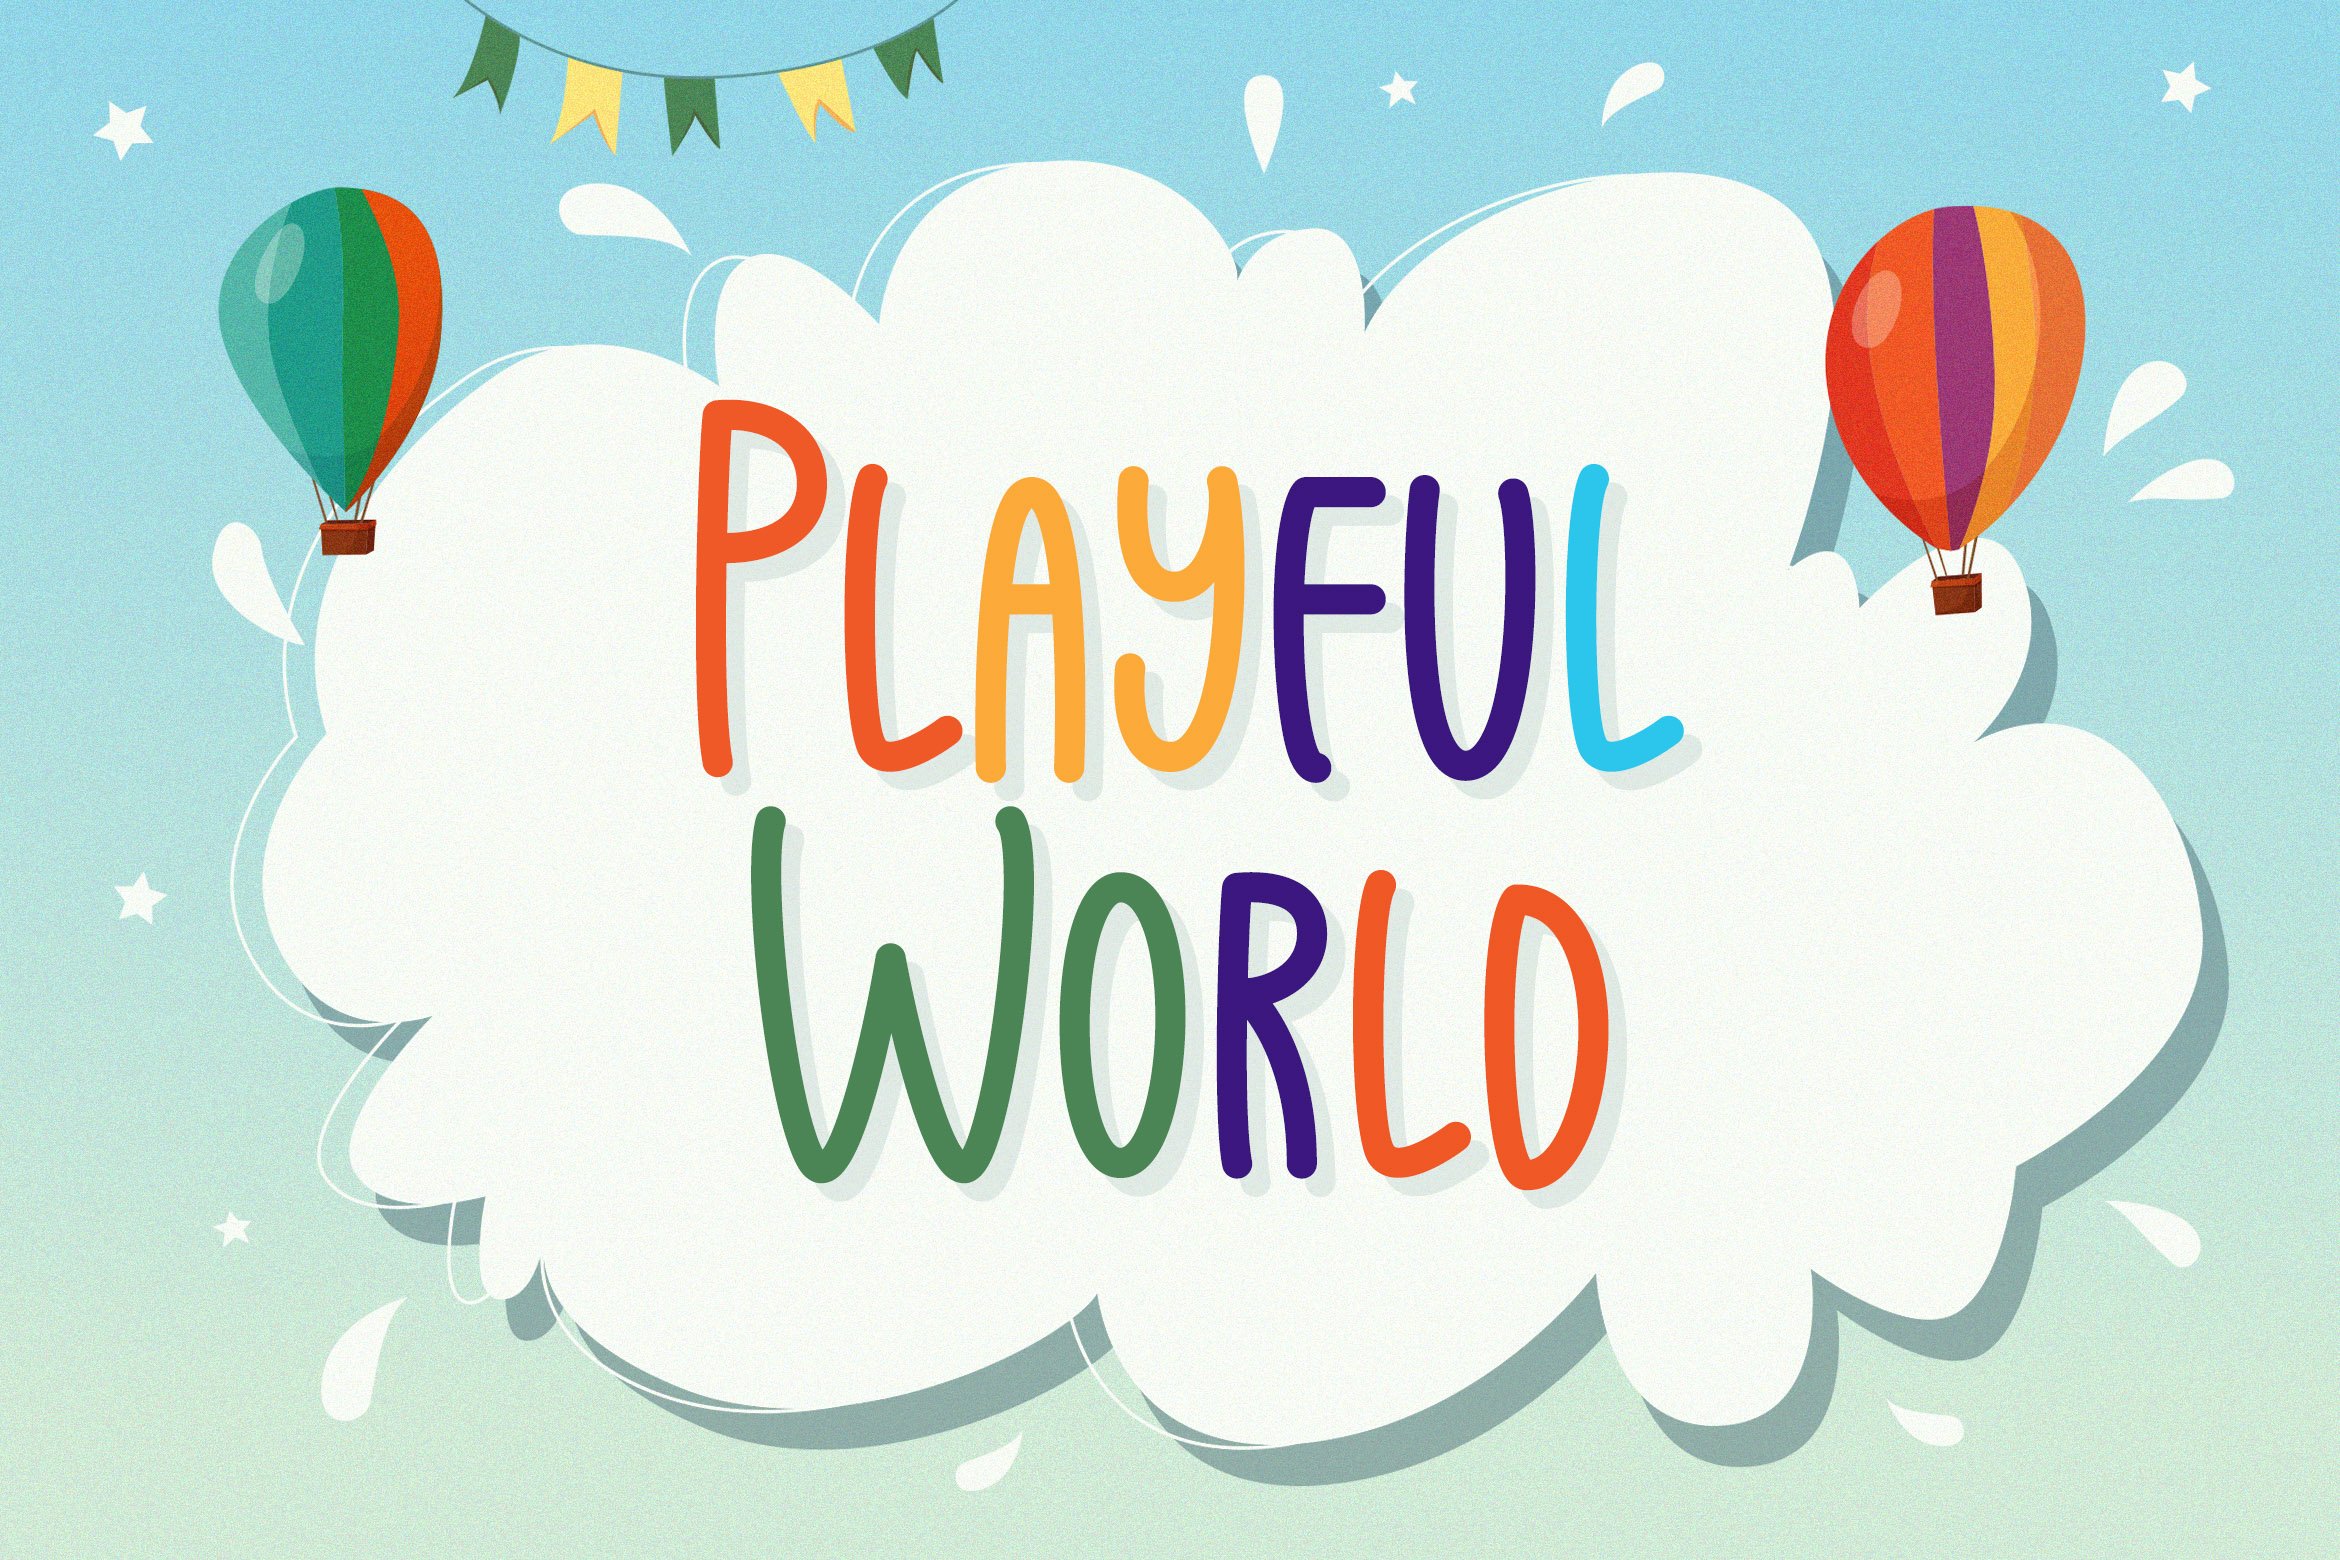 Playful World - Playful Display Font cover image.